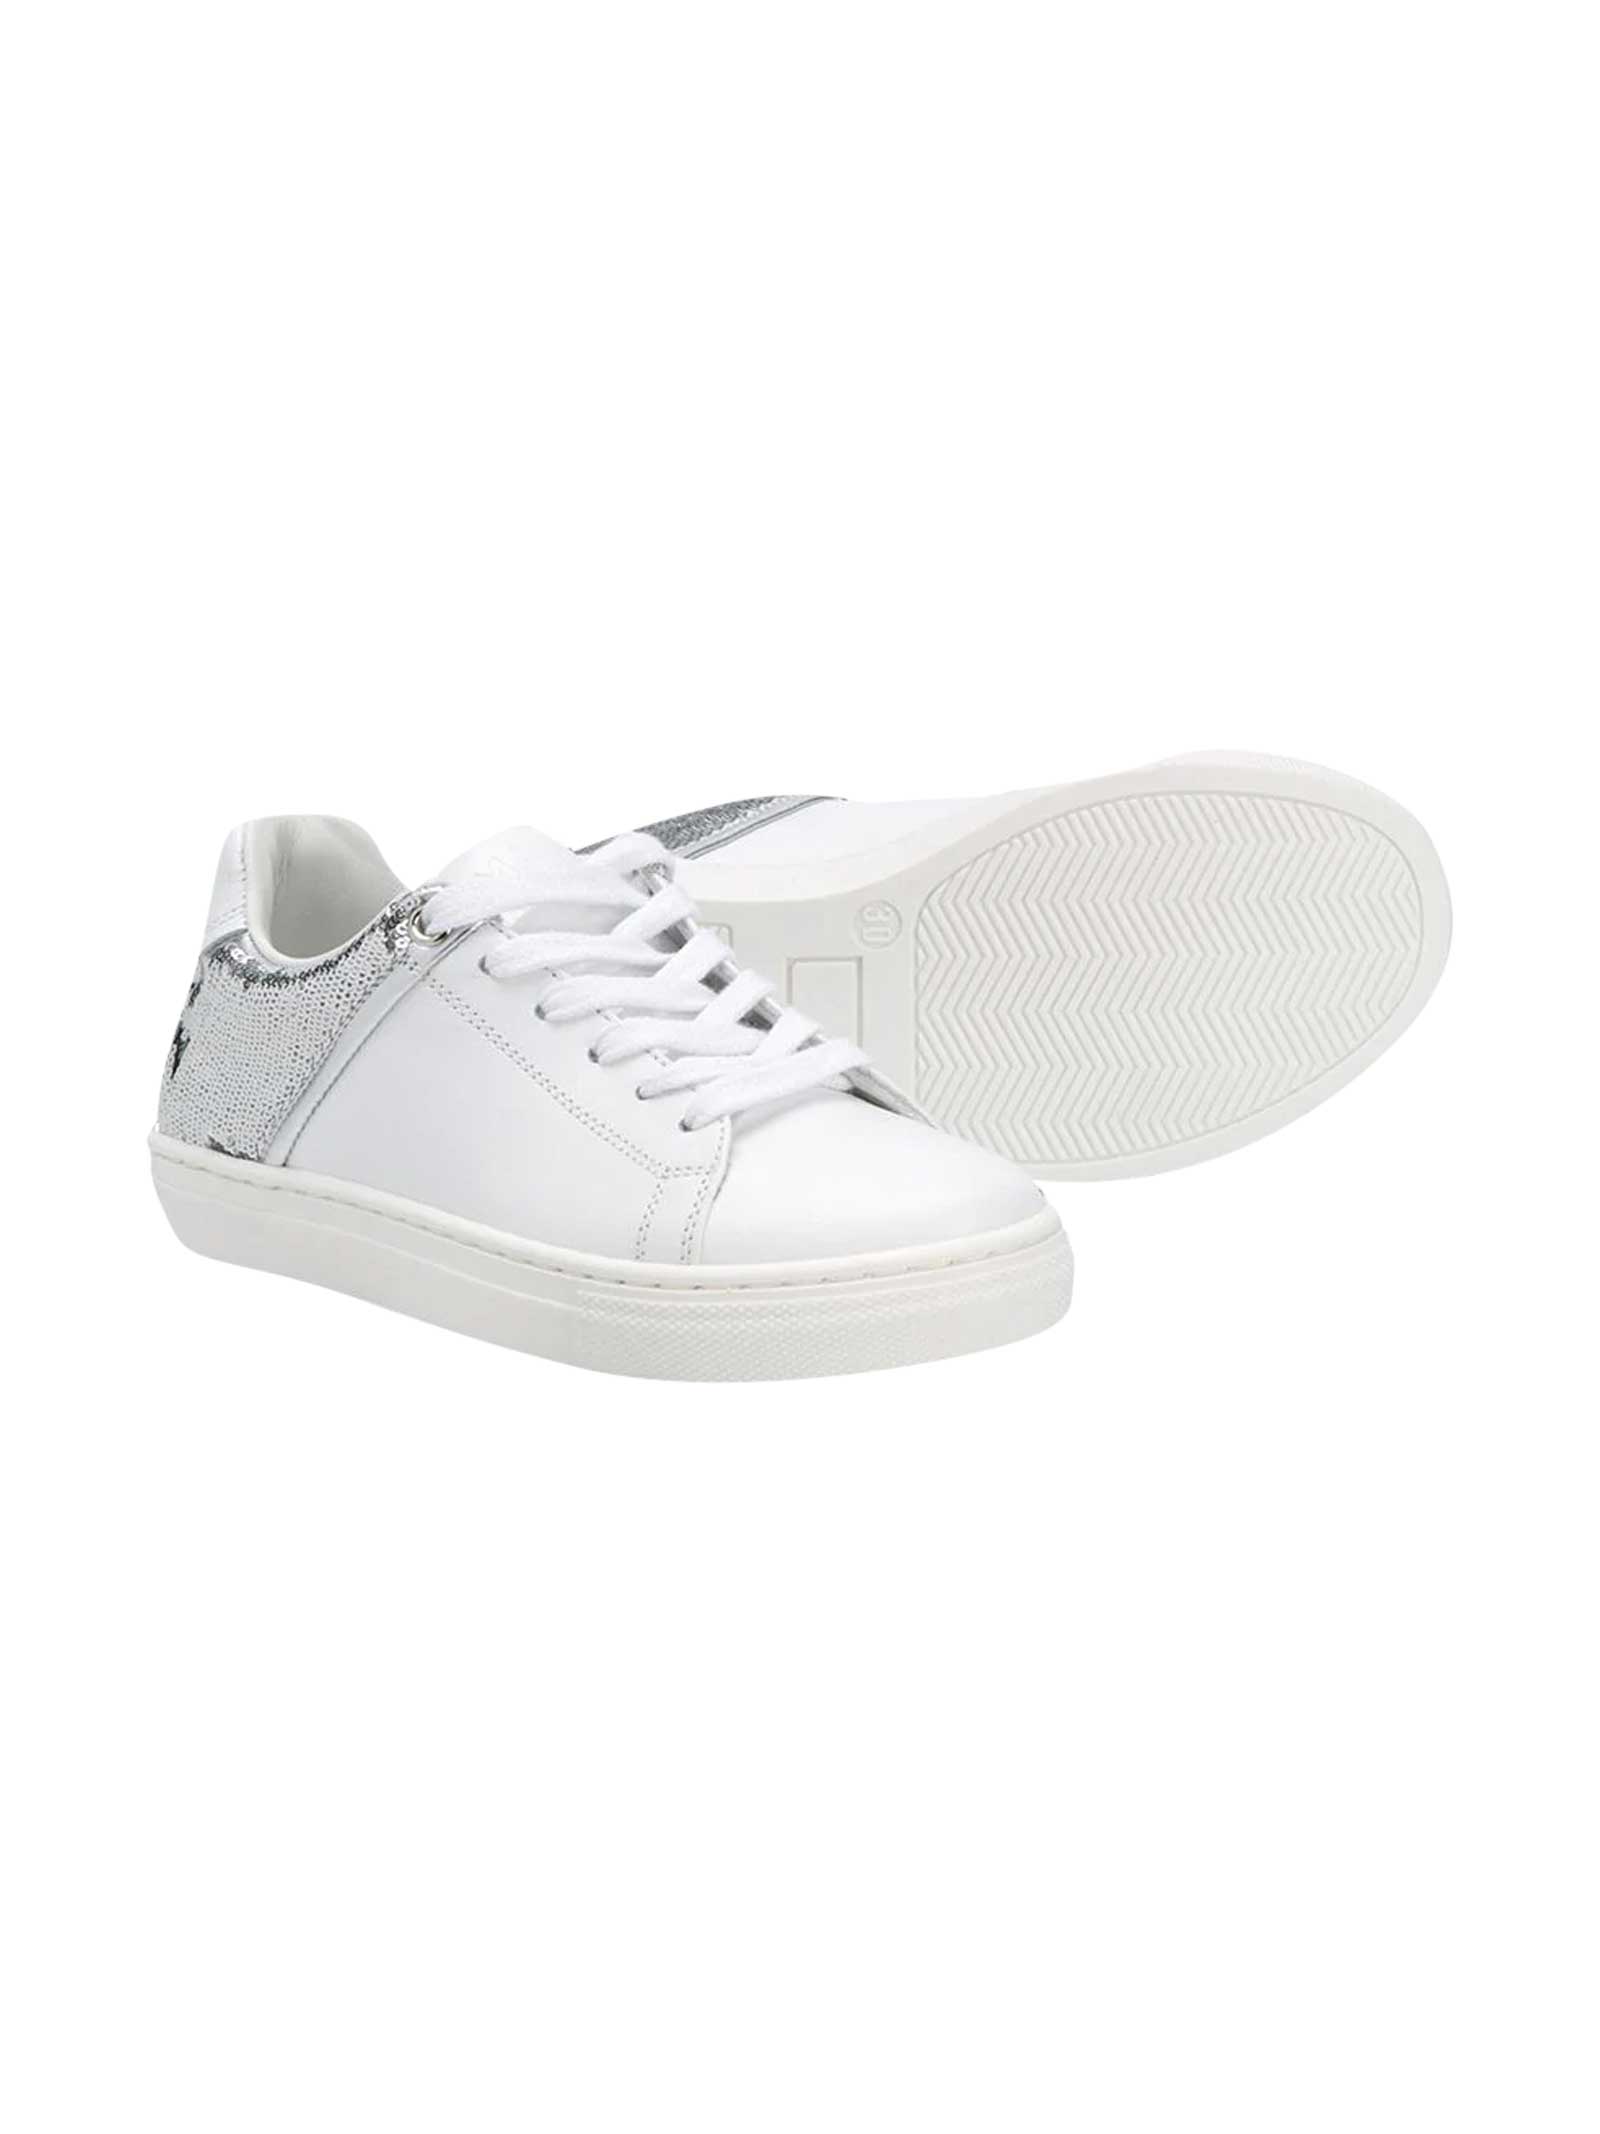 balmain white sneakers